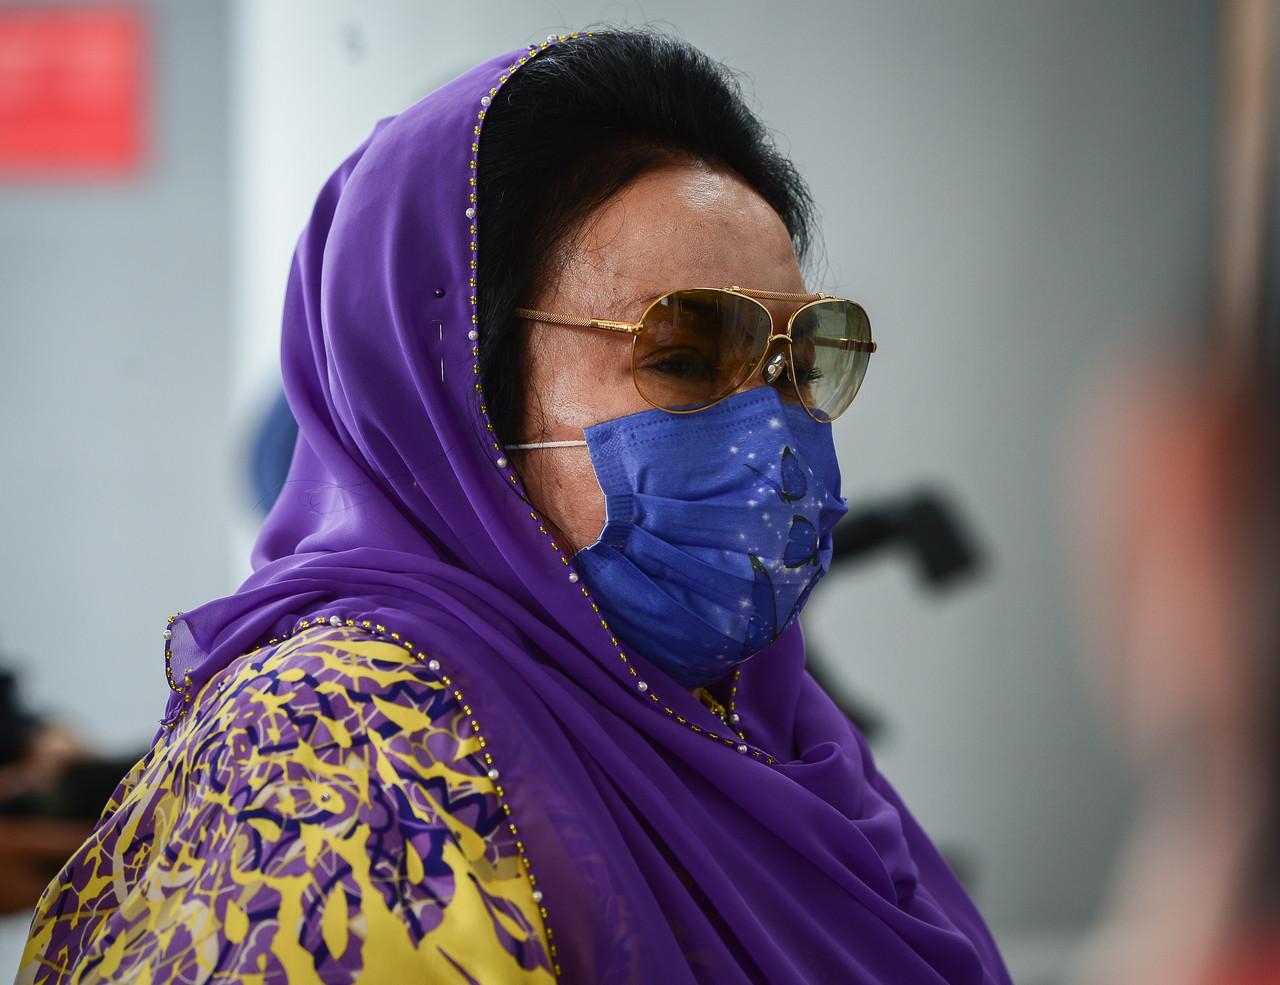 Rosmah Mansor, the wife of former prime minister Najib Razak, at the Kuala Lumpur court complex today. Photo: Bernama